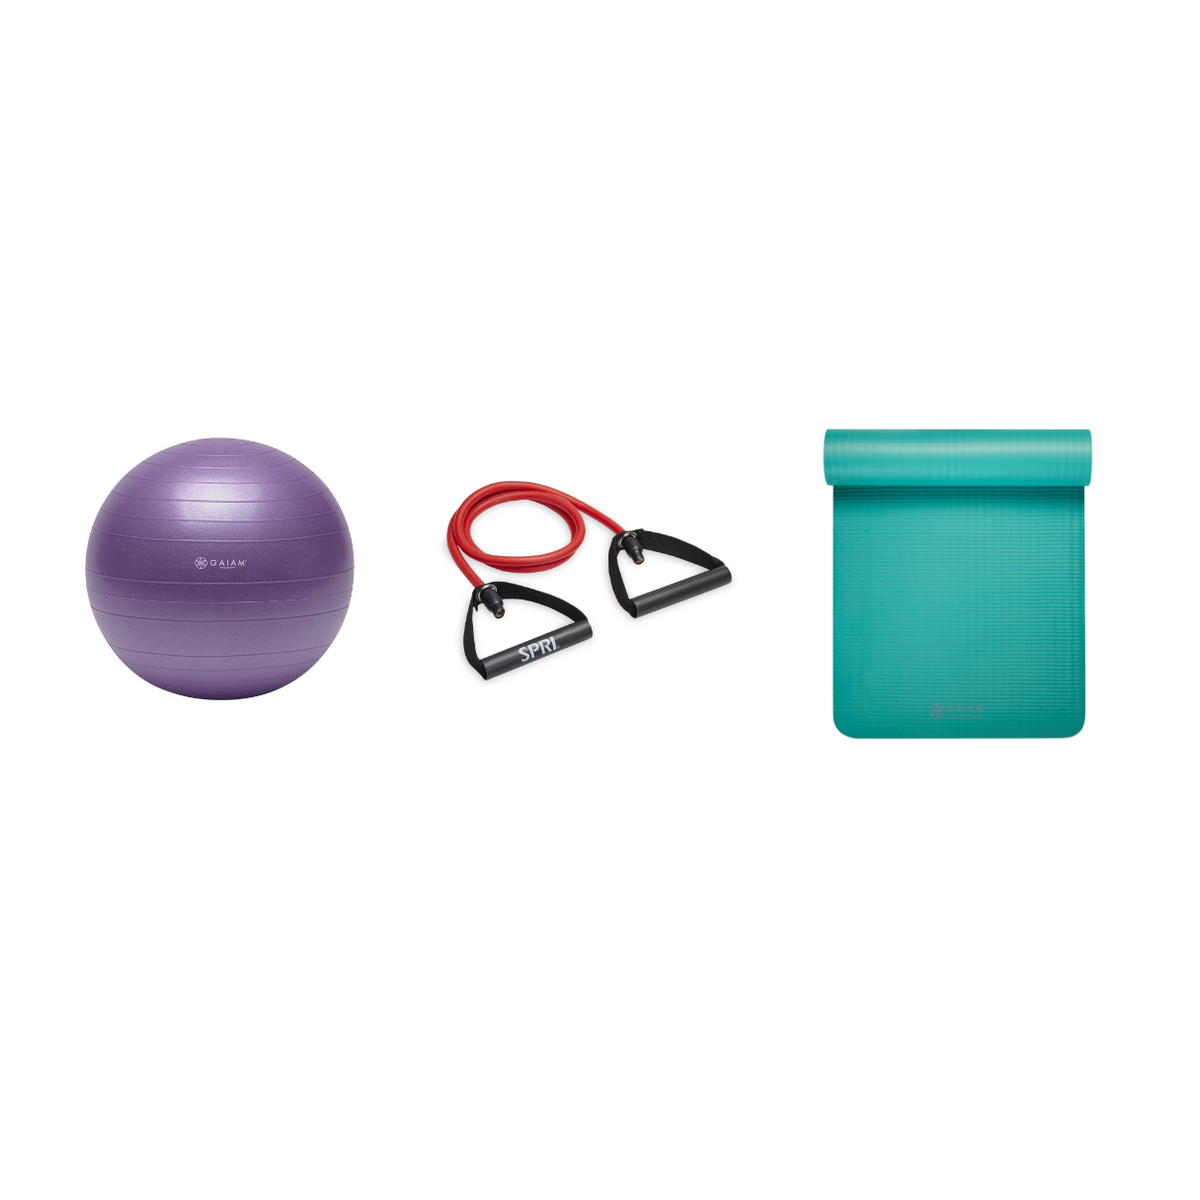 Fitness Bundle - Balance Ball (55cm), Xertube (Medium), Fitness Mat (Teal)Fitness Bundle - Balance Ball (55cm), Xertube (Medium), Fitness Mat (Teal)